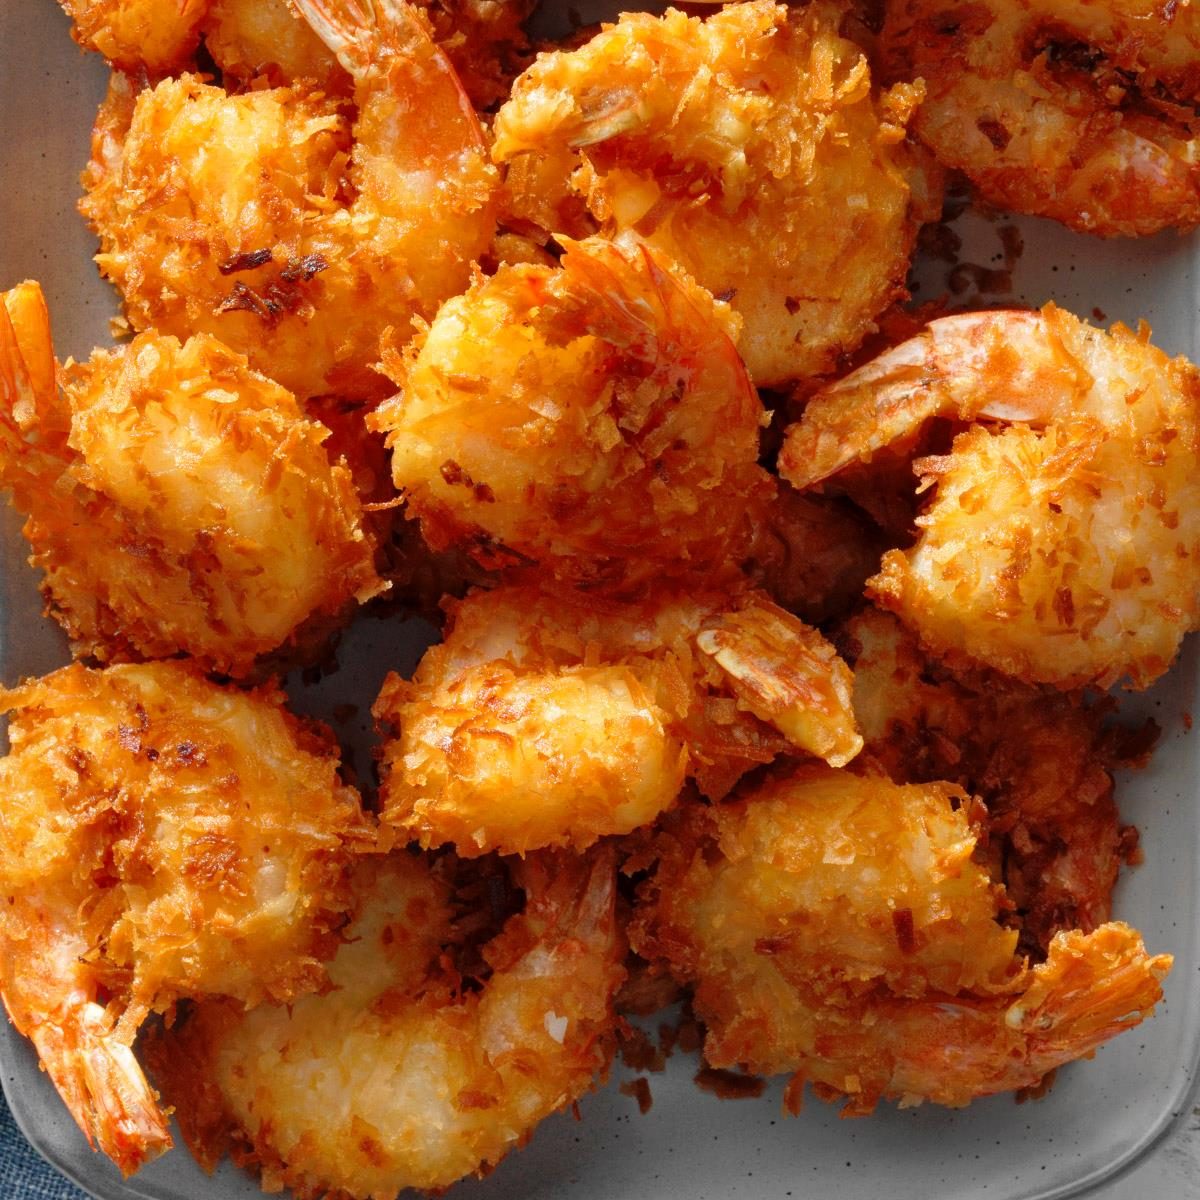 Coconut Fried Shrimp Recipe: How to Make It